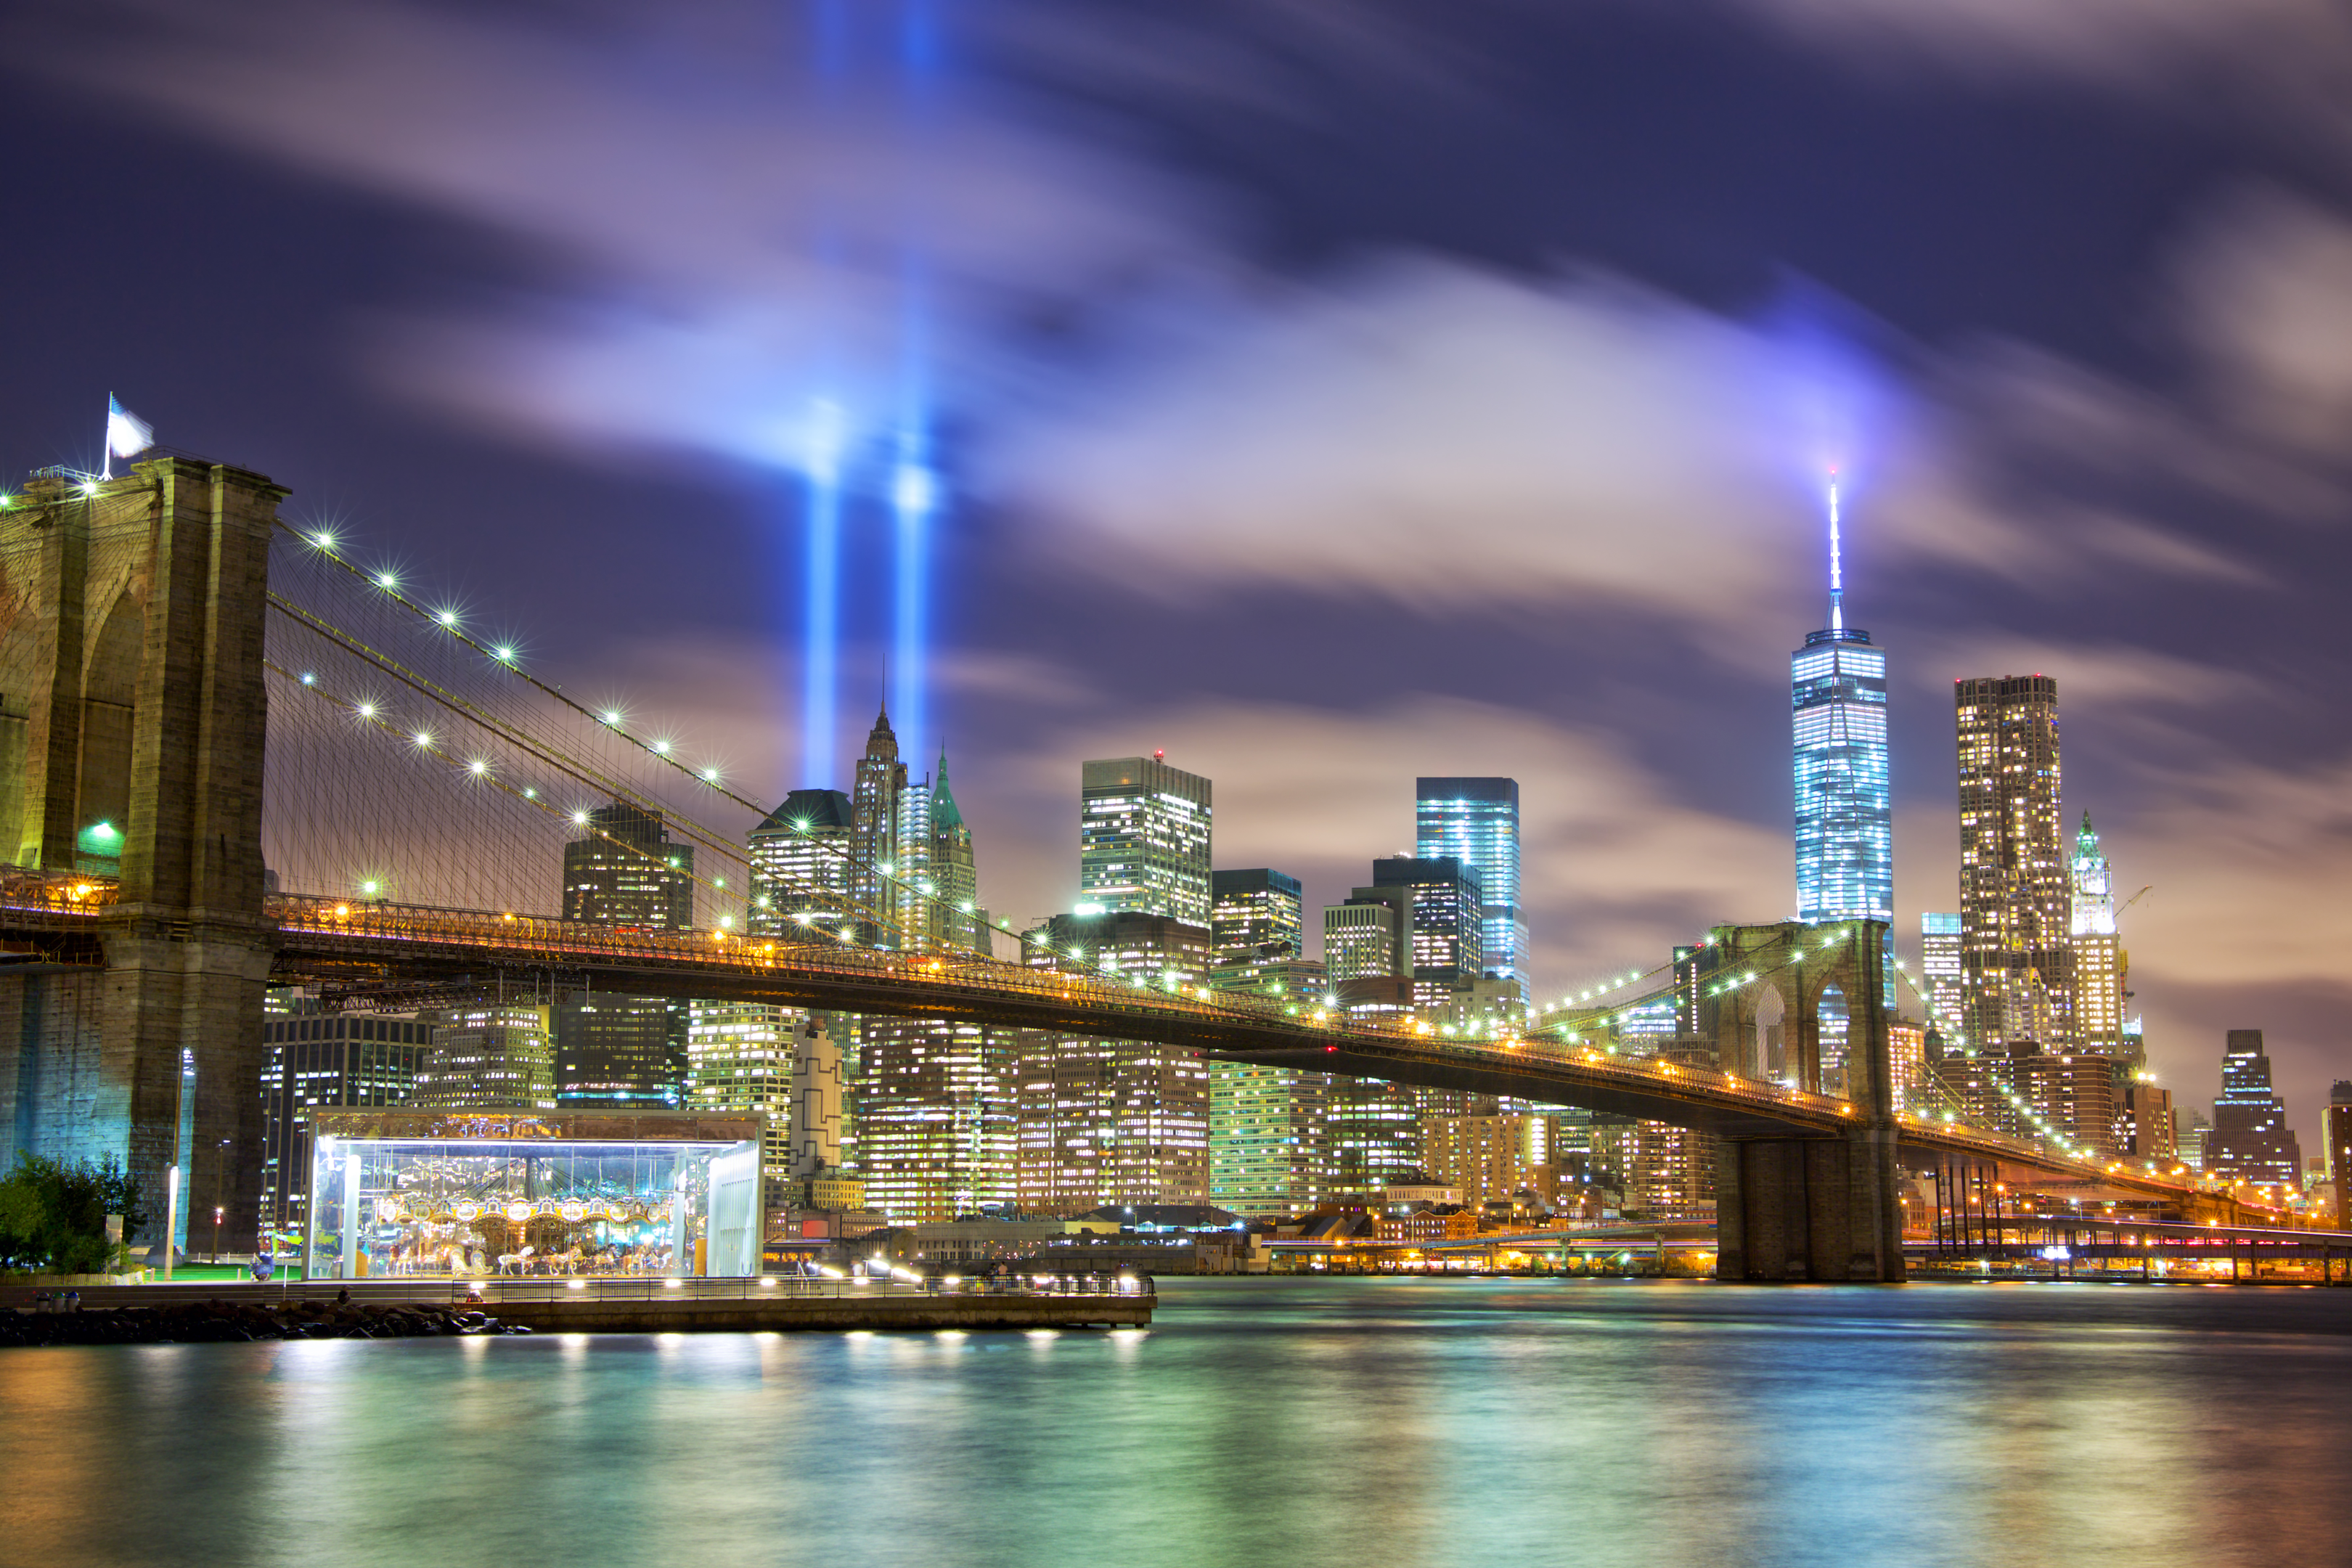 September 11th remembered in Manhattan